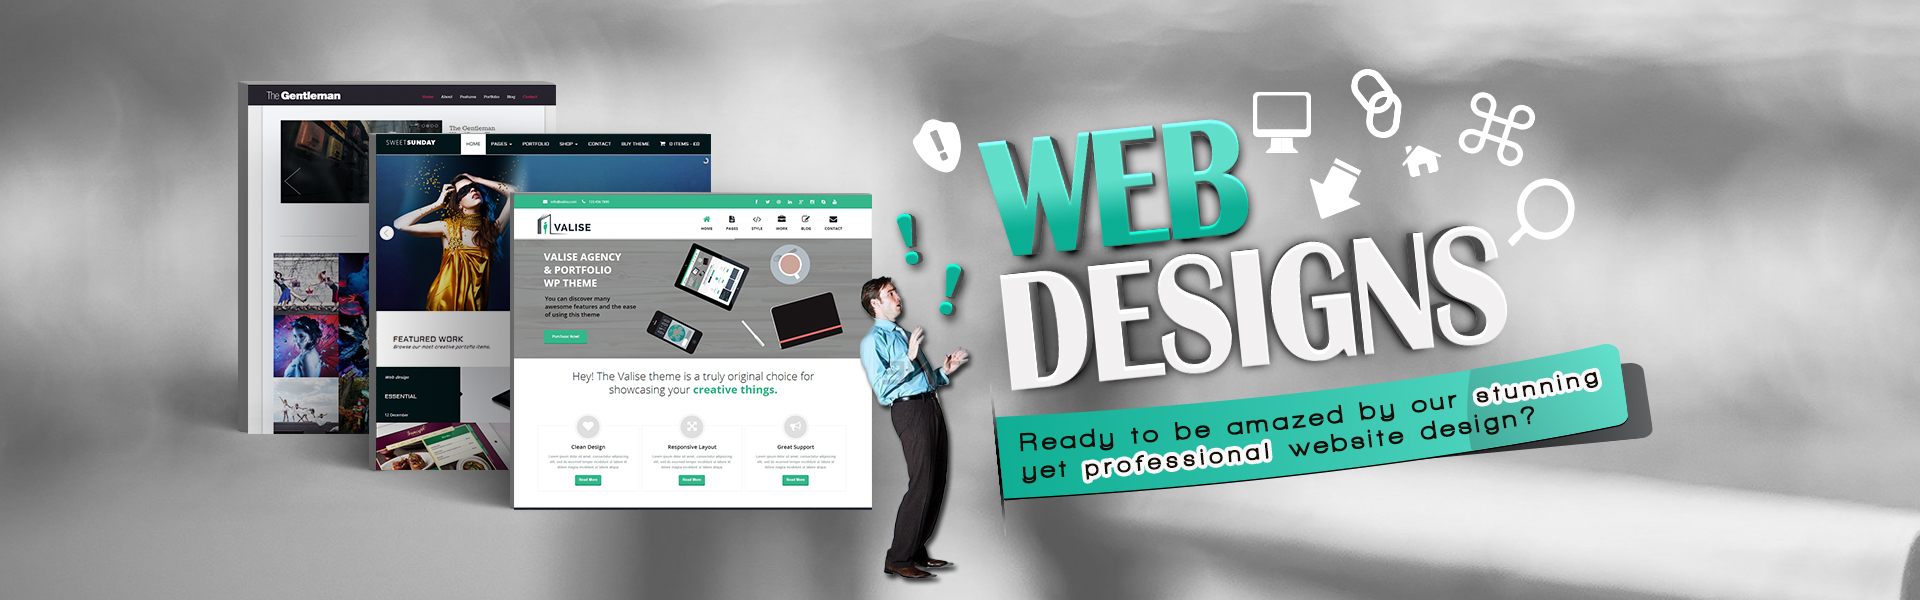 web-design-lawaweb-banner